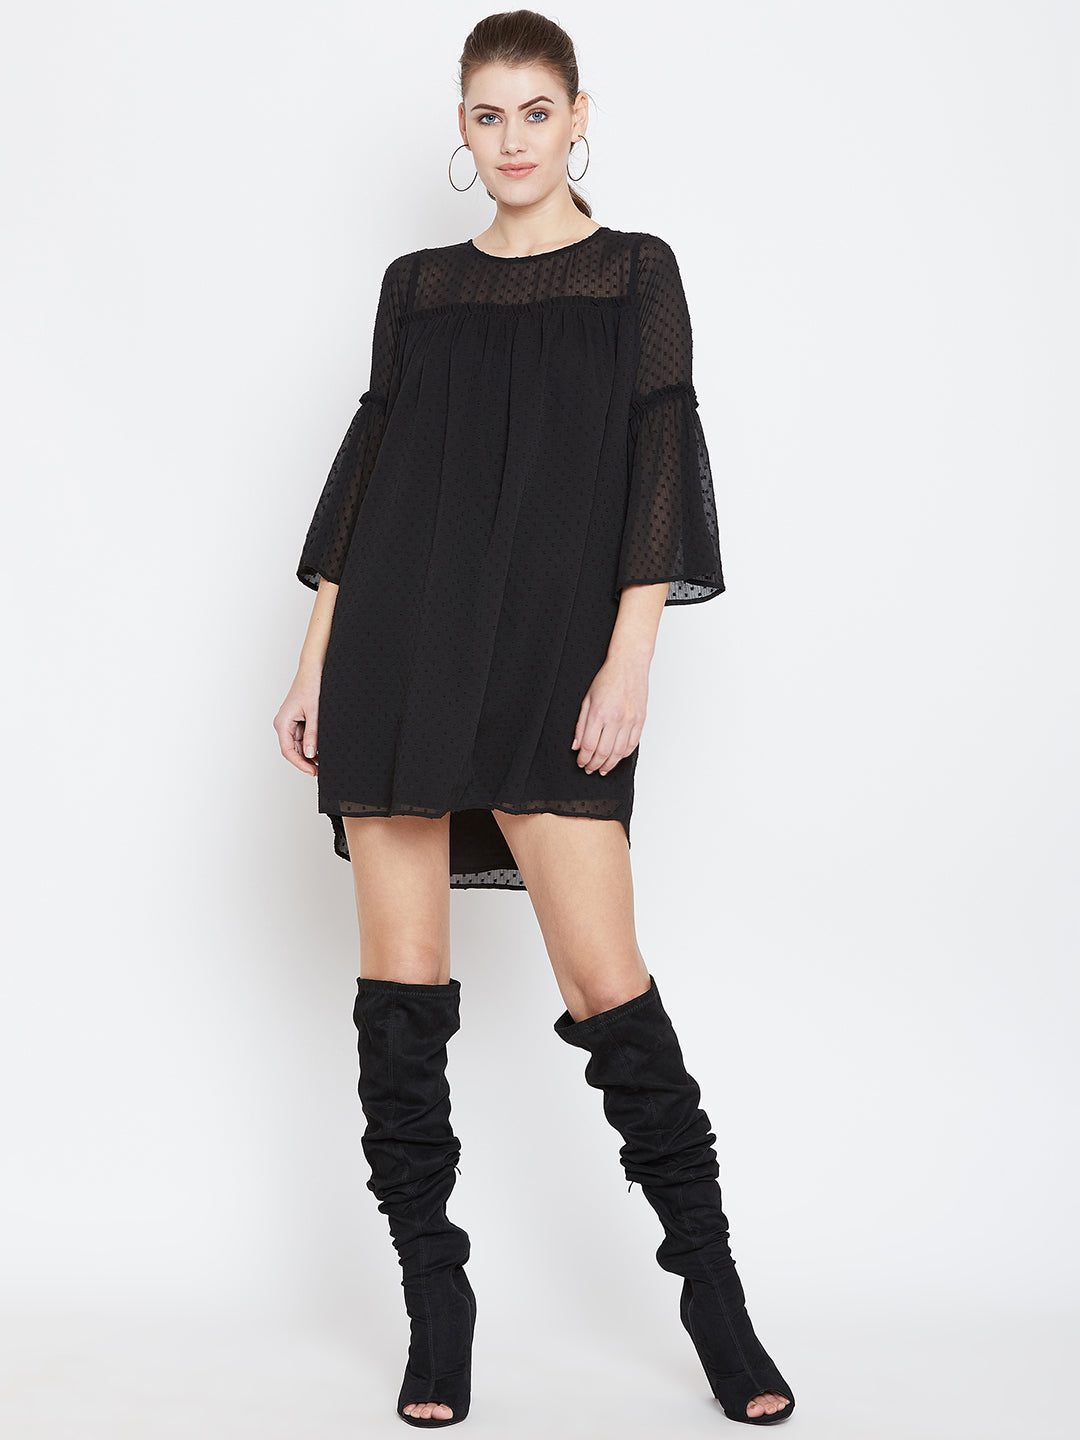 Berrylush Women Black Self-Design Round-Neck High-Low Hem A-Line Mini Dress